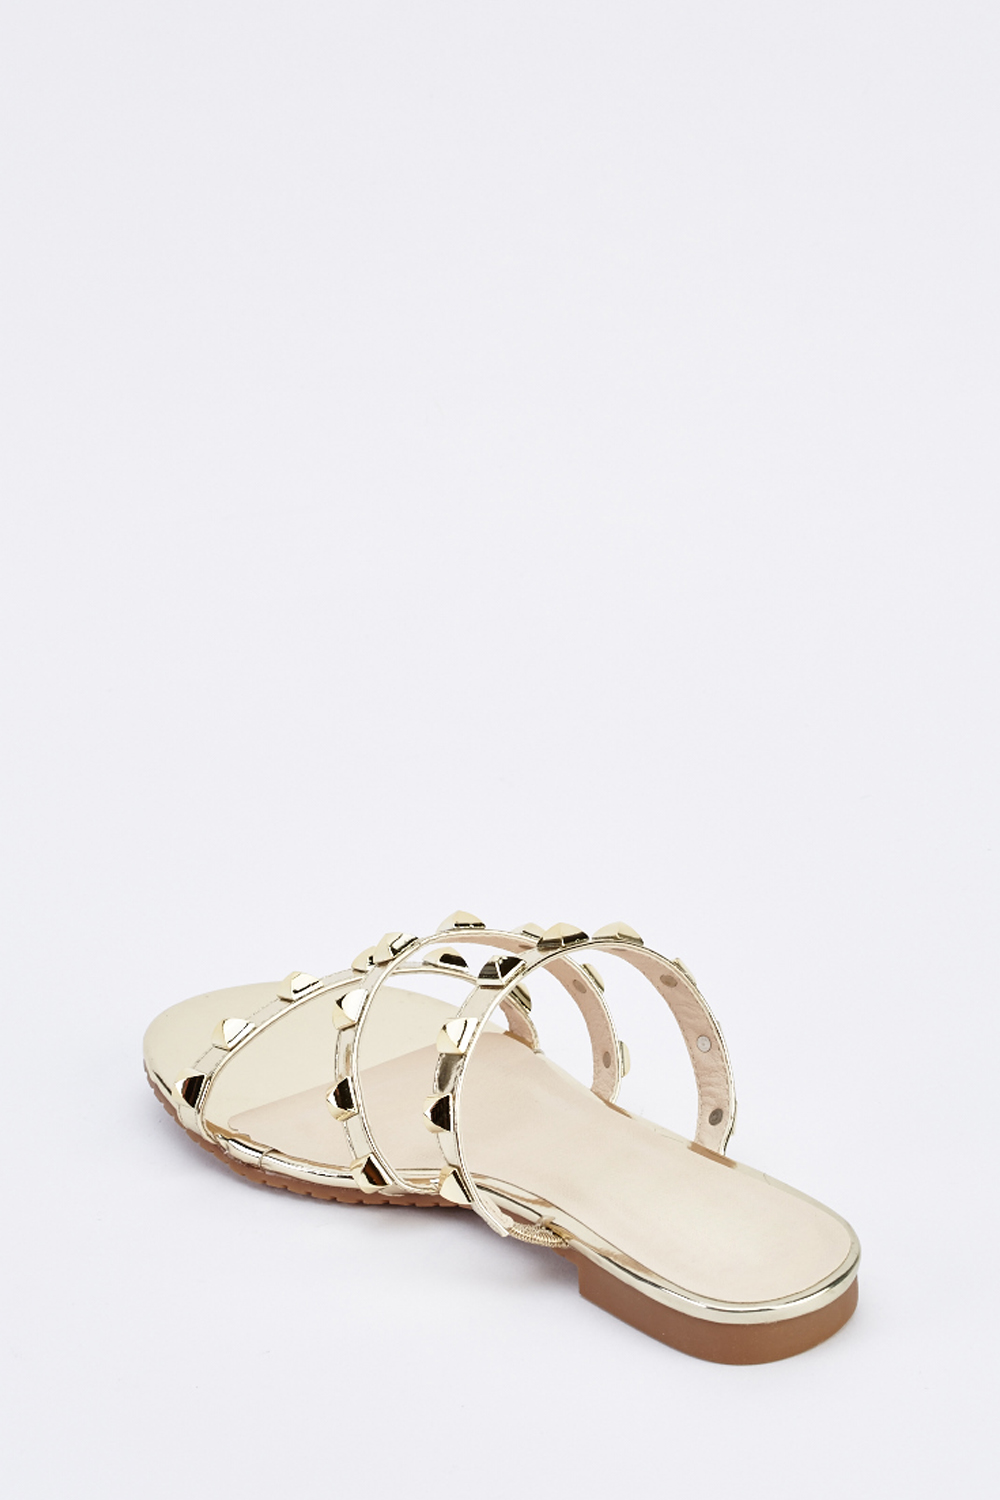 Metallic Studded Slide Sandals - Just $6